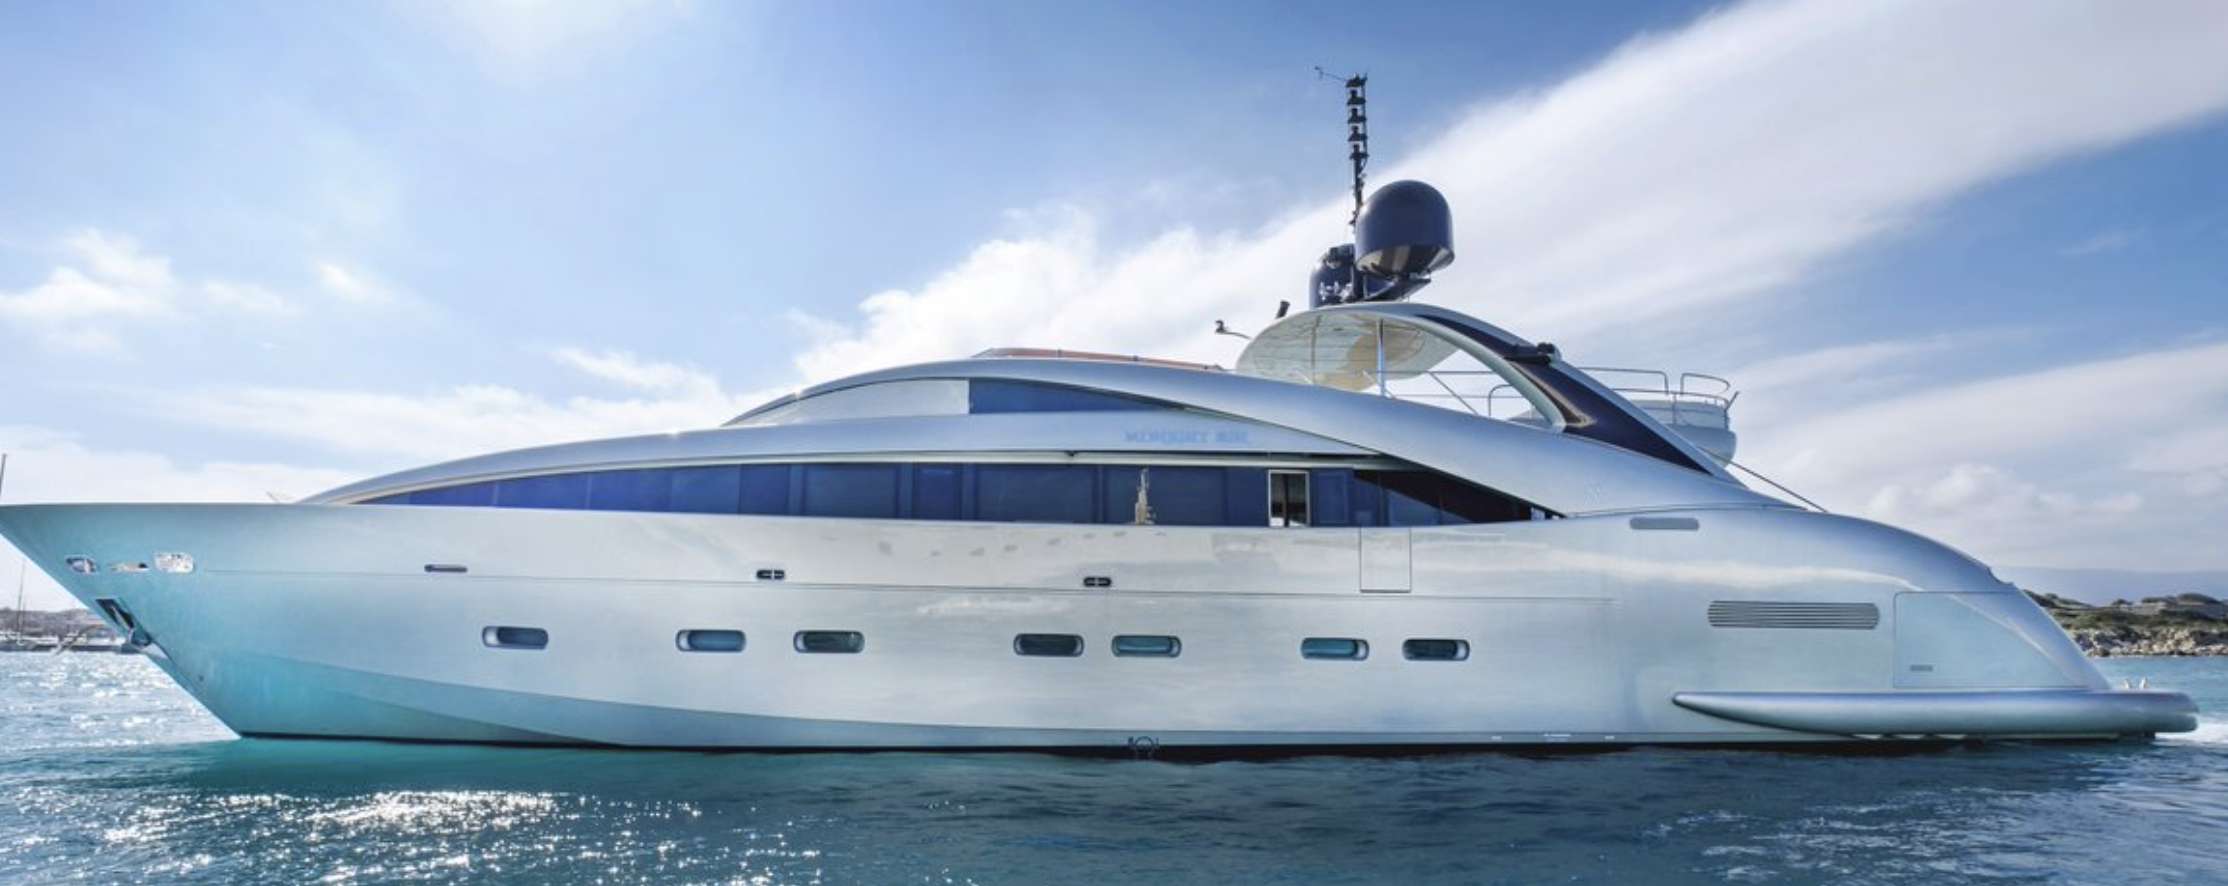 YCM 120 - Luxury yacht charter St Martin & Boat hire in Riviera, Corsica, Sardinia, Spain, Balearics, Caribbean 4